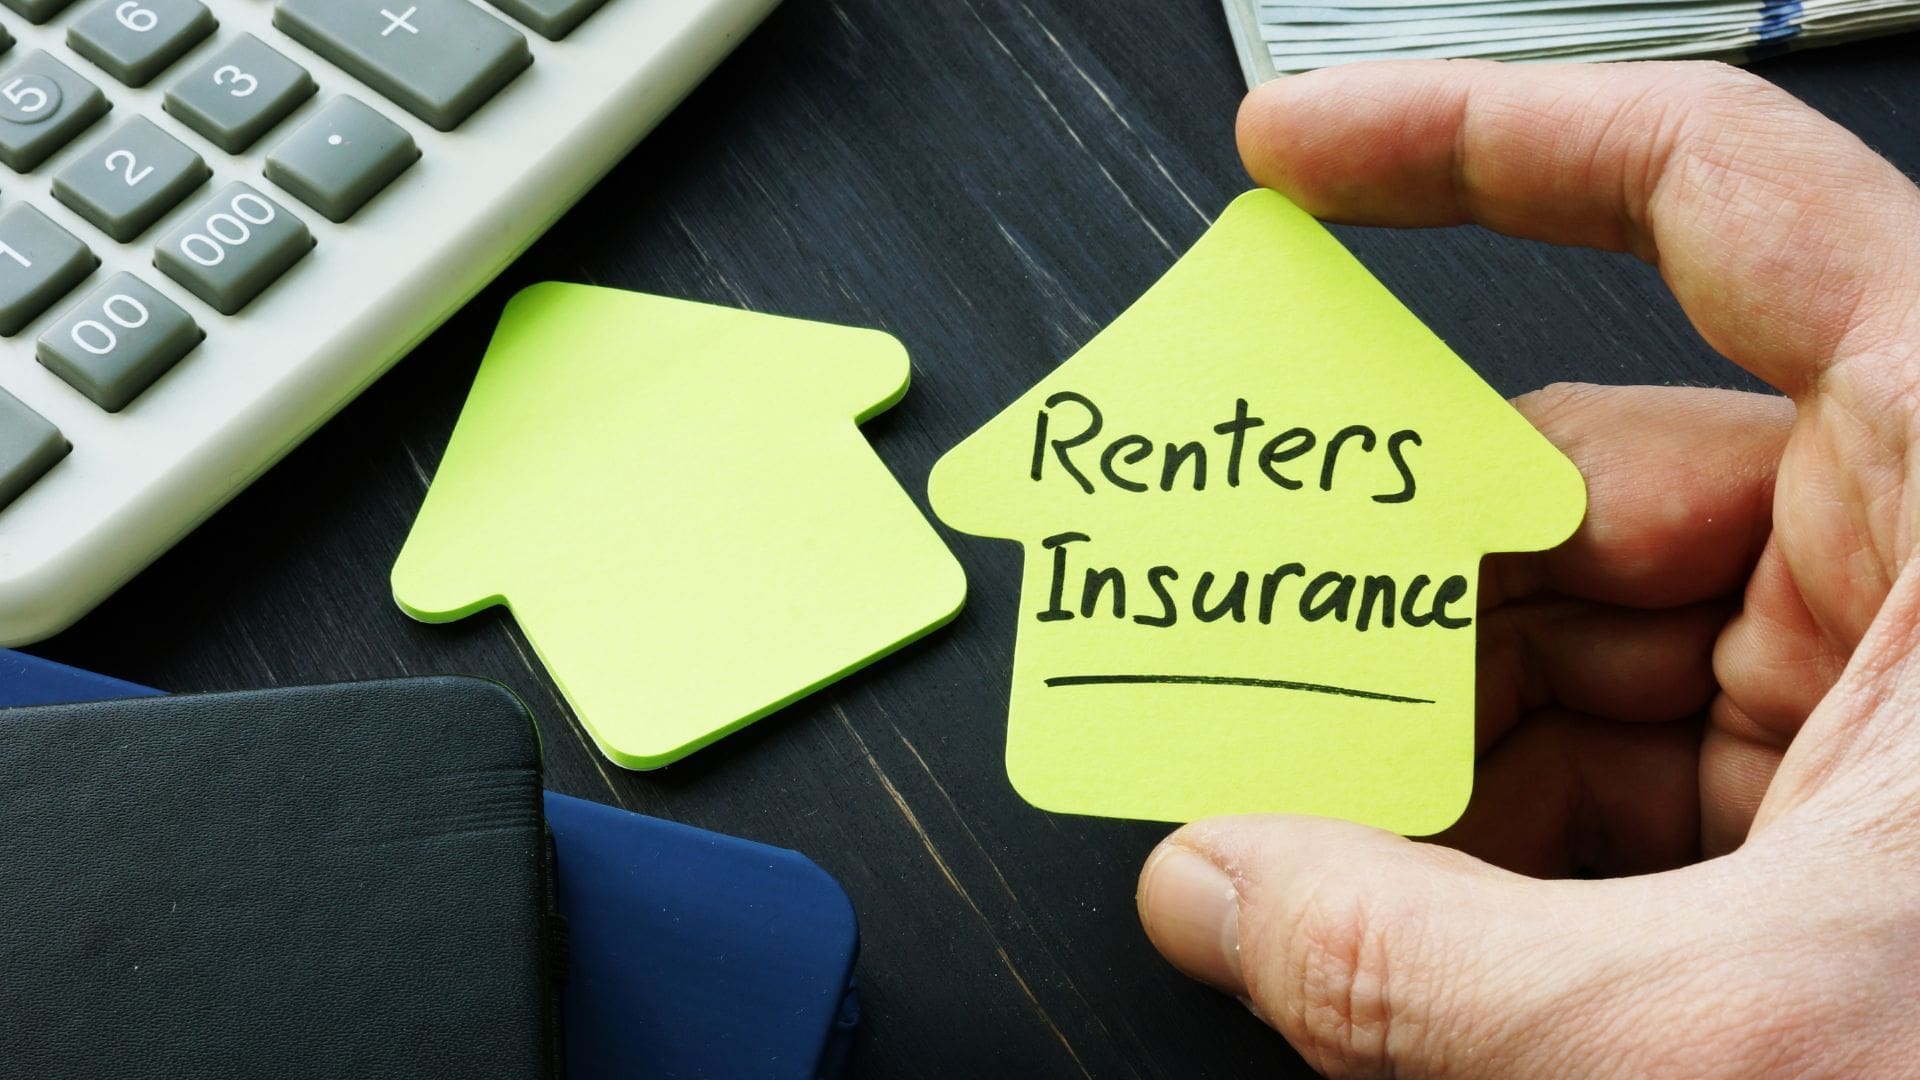 Renters Insurance Written On The House Shaped Sheet